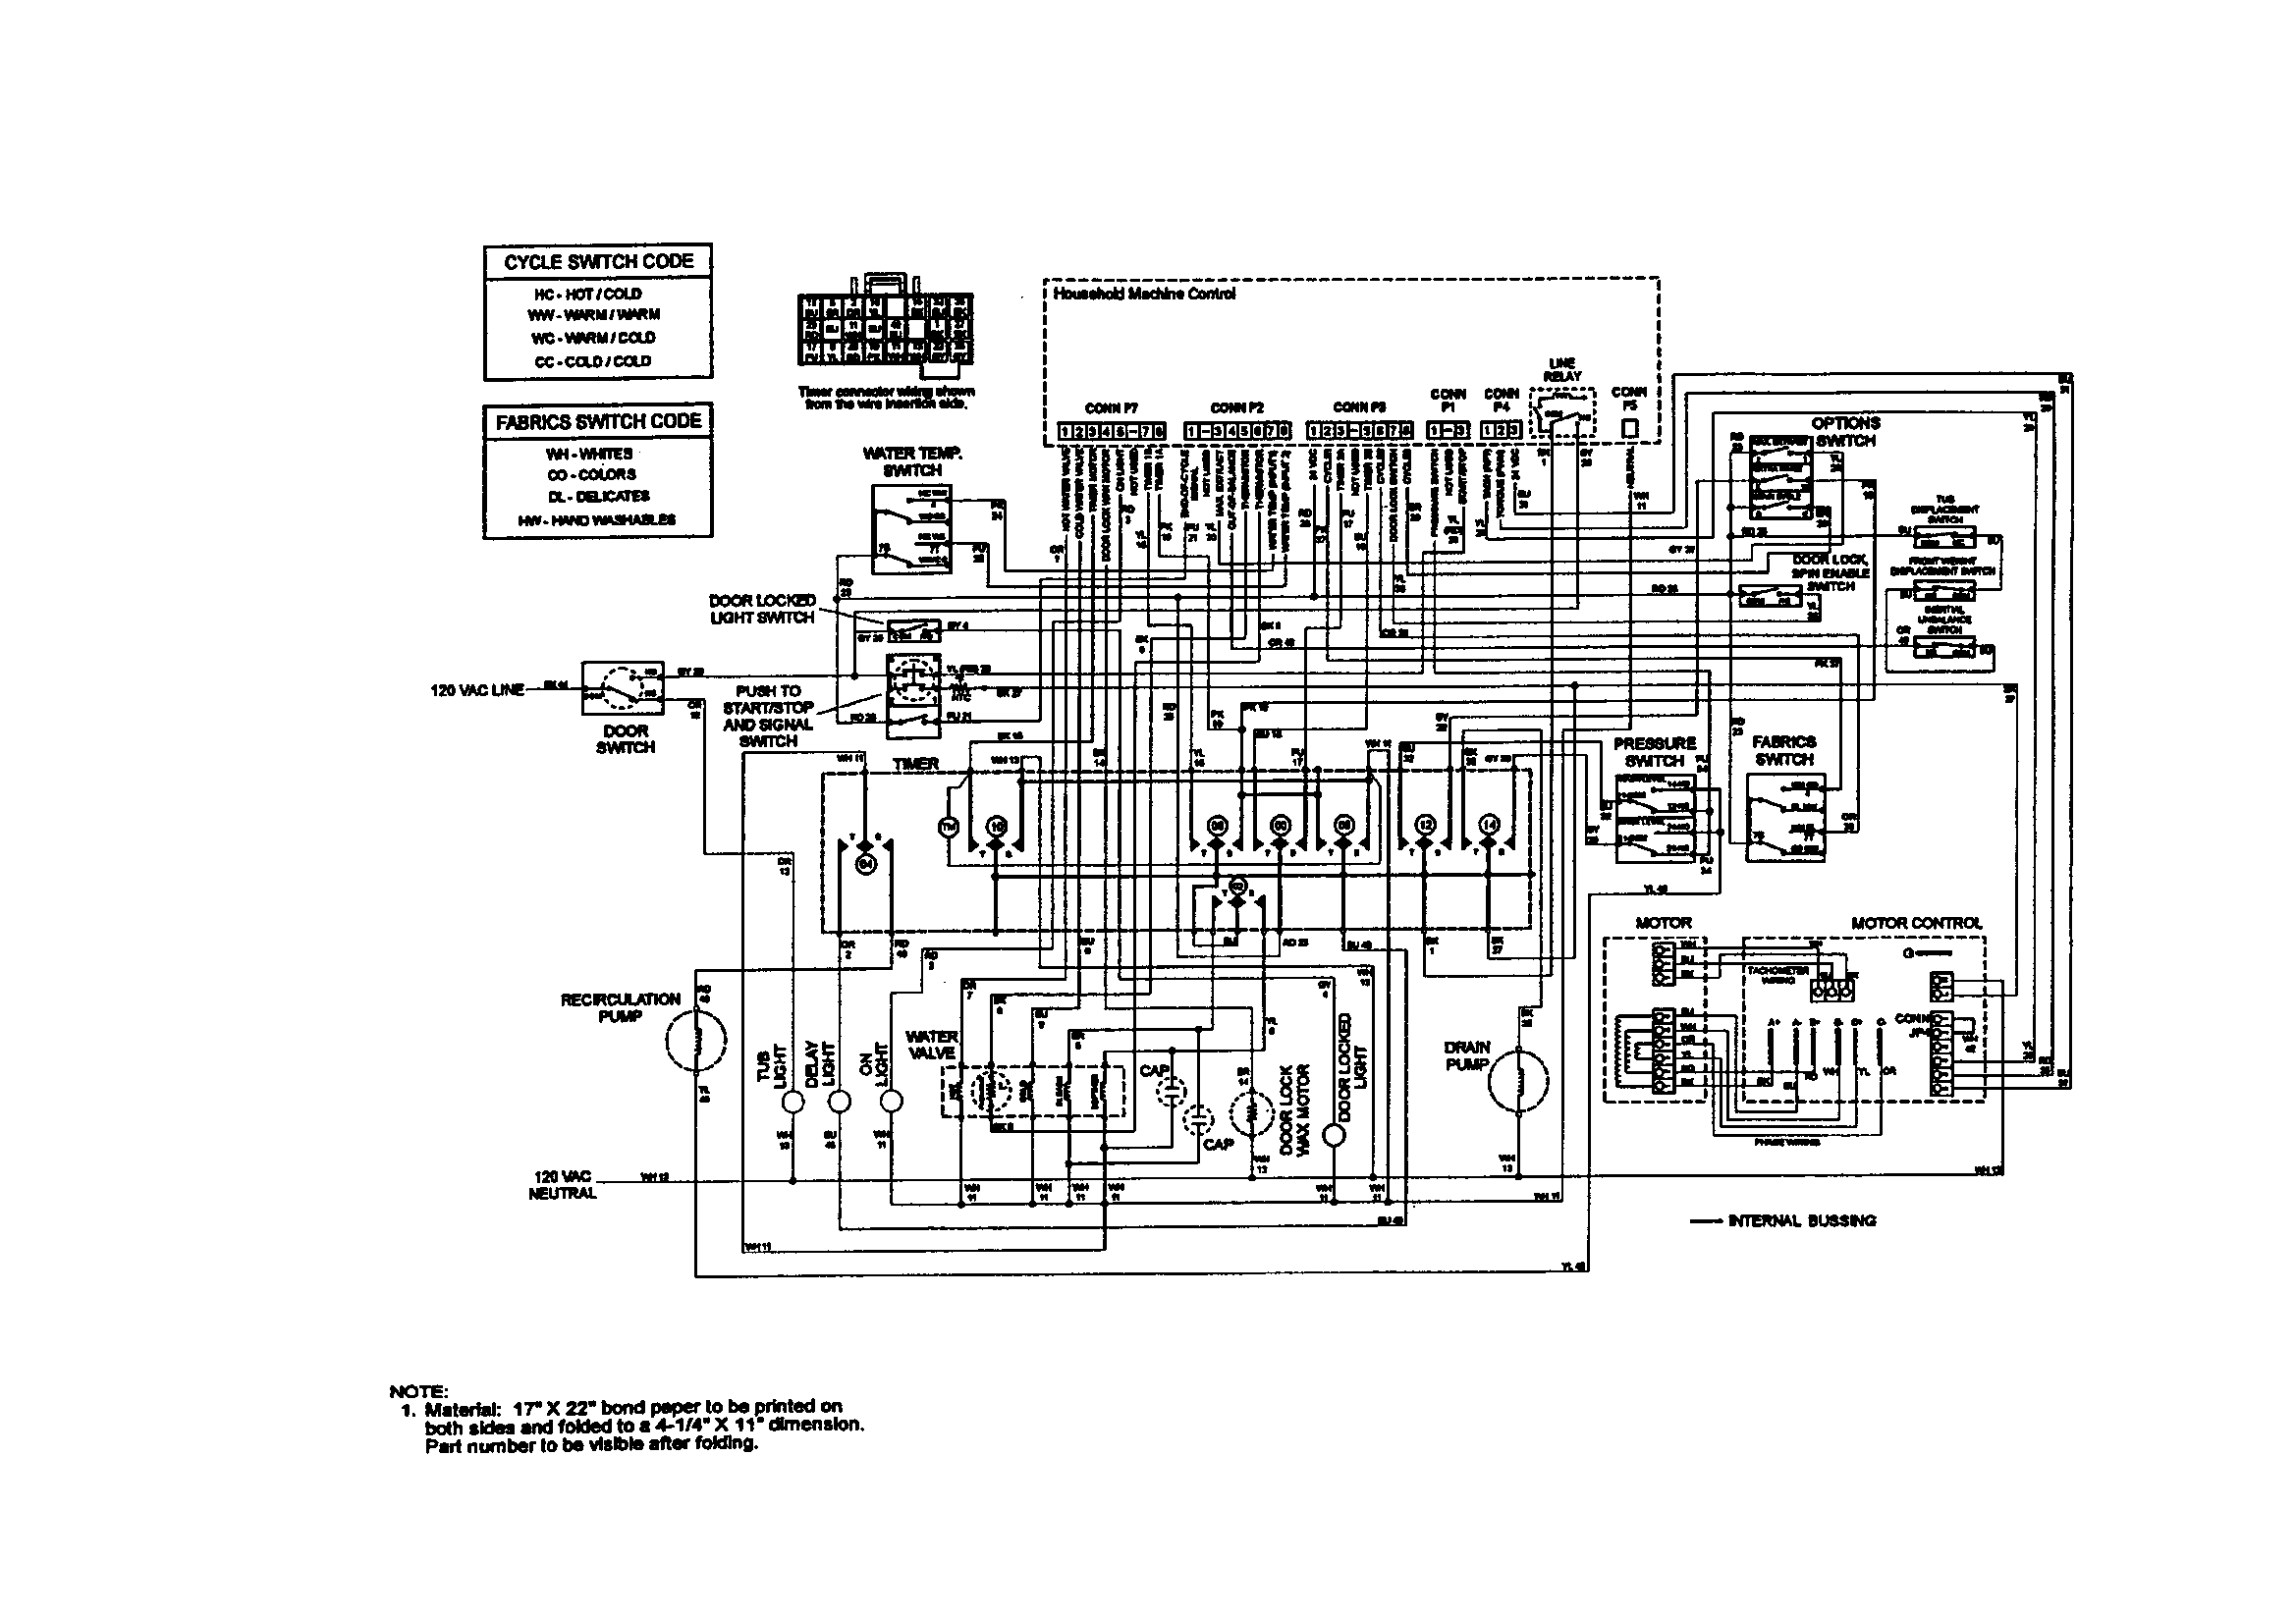 furnace model number tg9s060b12mp11 manual